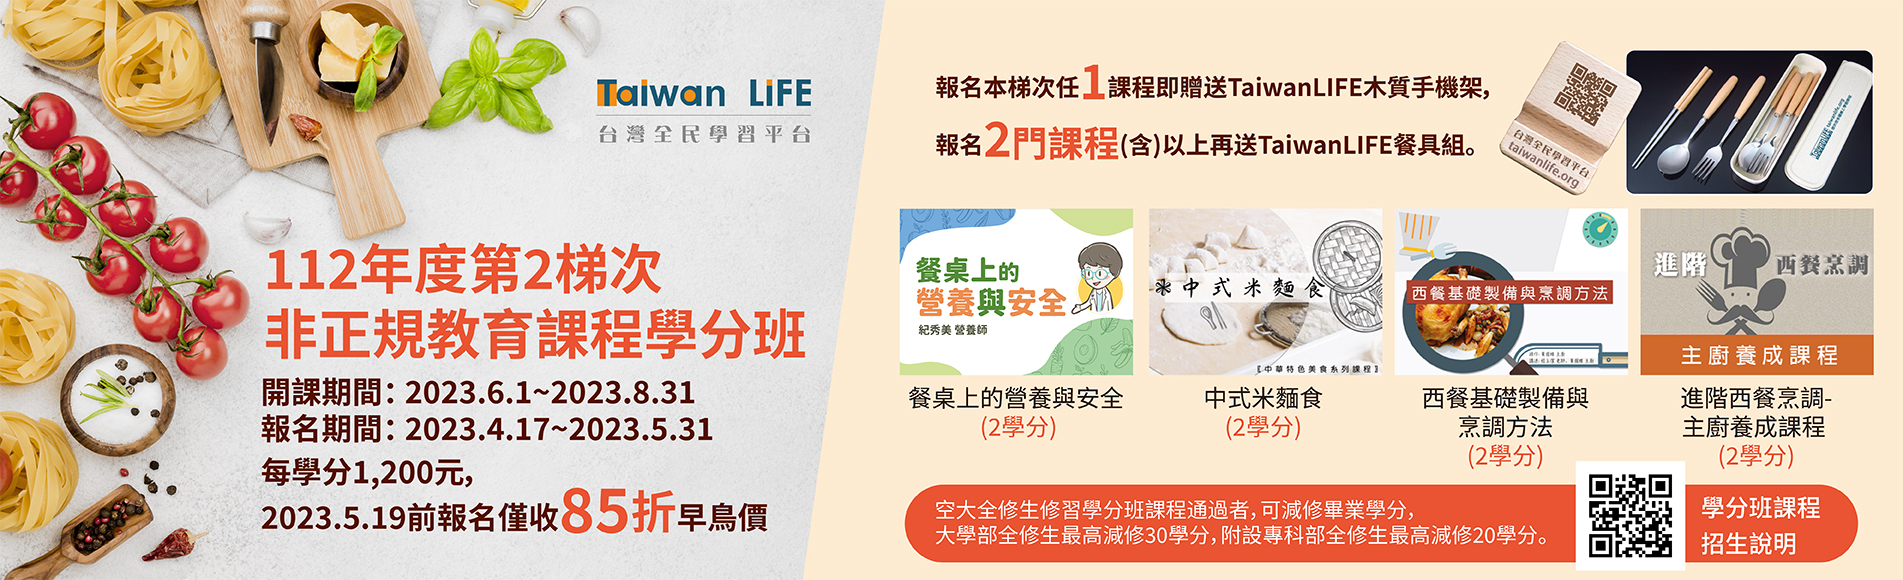 TaiwanLIFE台灣全民學習平台」112-2招...